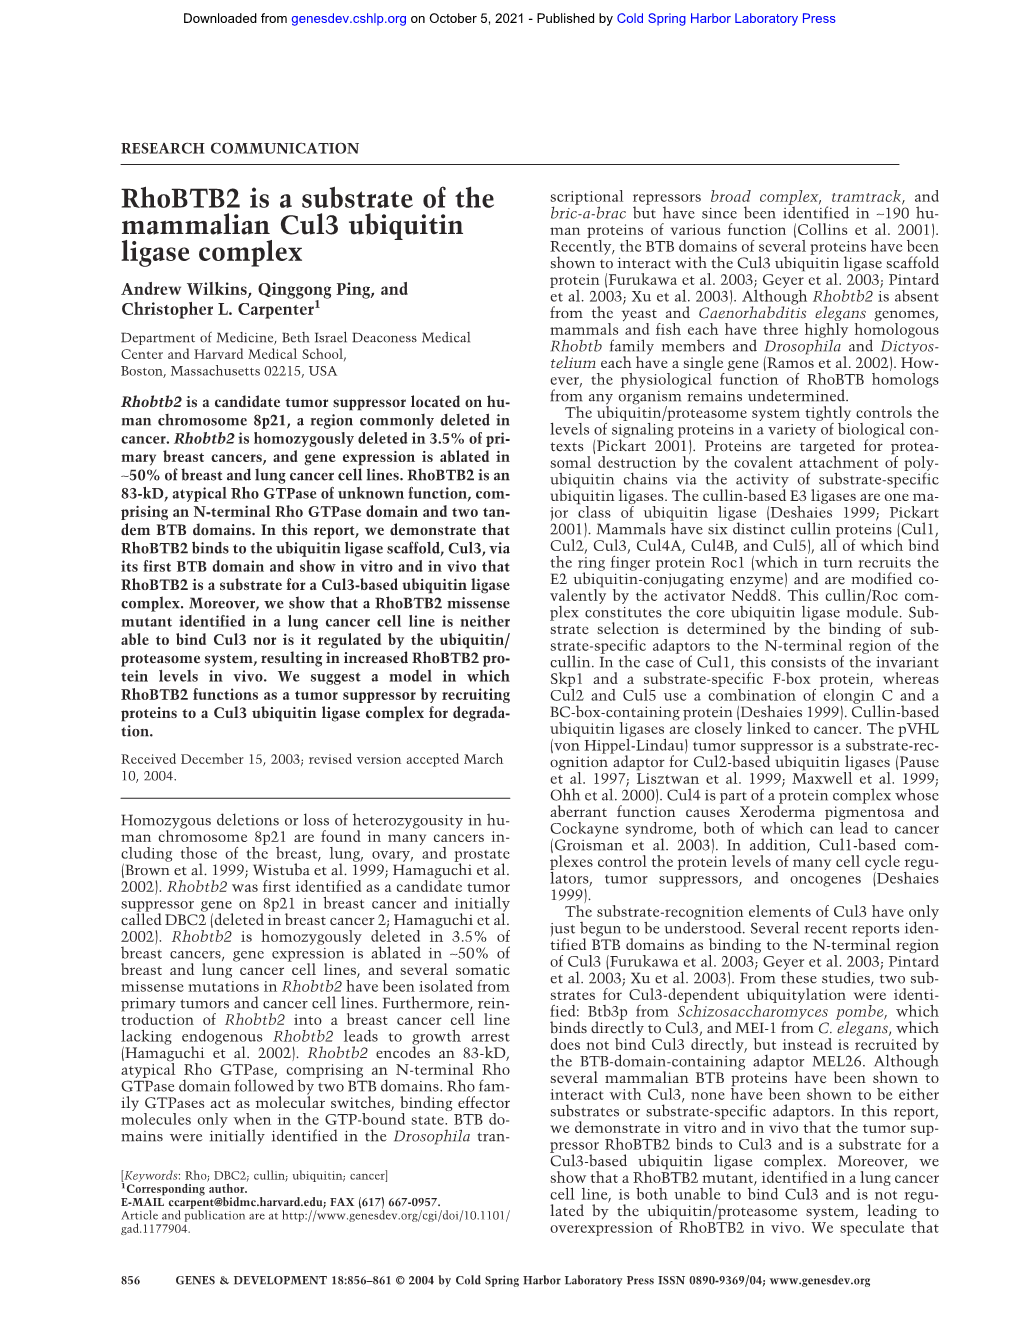 Rhobtb2 Is a Substrate of the Mammalian Cul3 Ubiquitin Ligase Complex